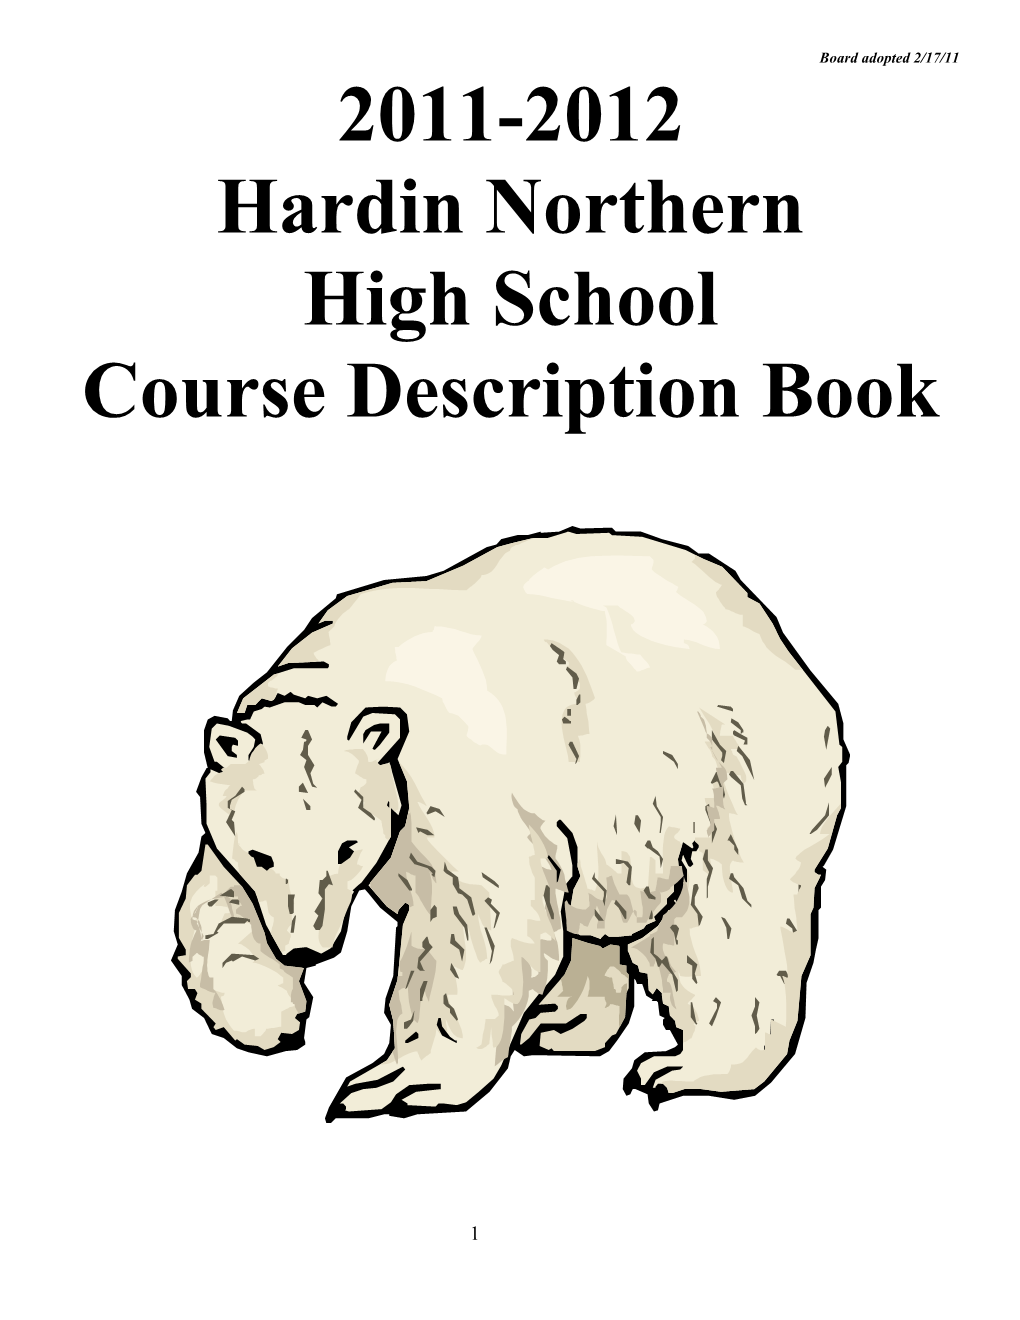 Hardin Northern High School (Grades 9-12)